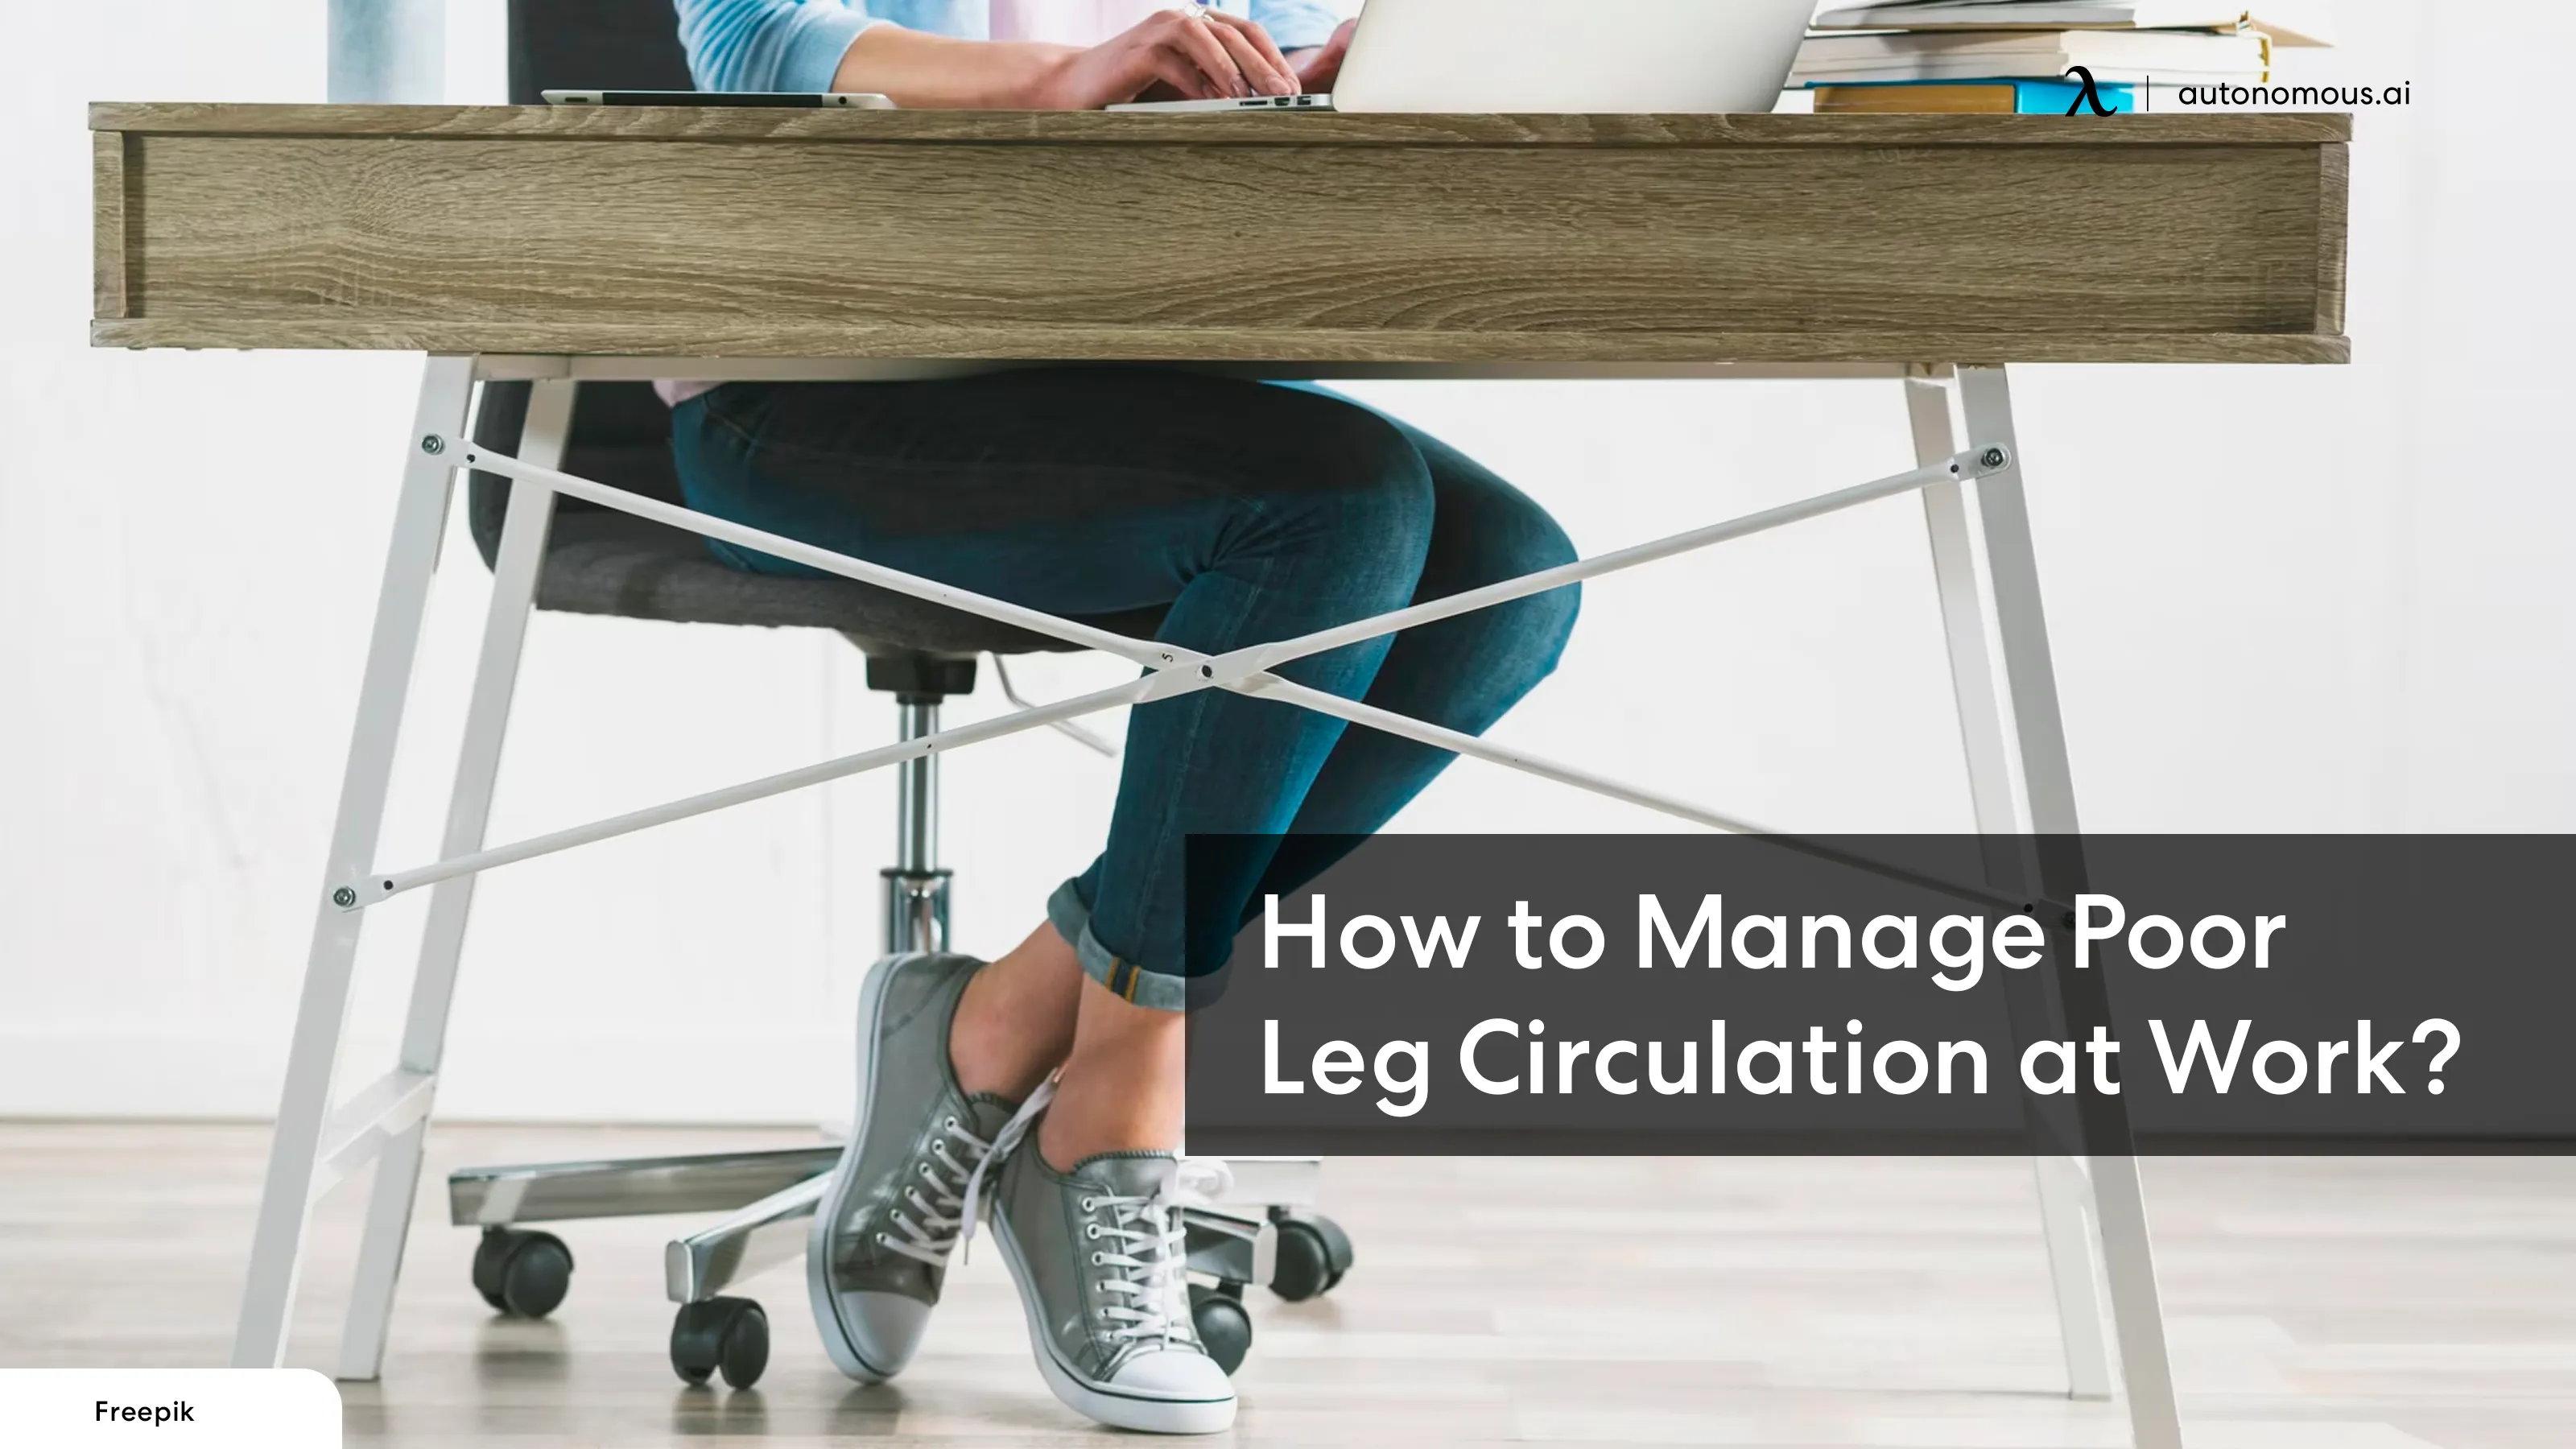 Tips to Manage Poor Leg Circulation at Work